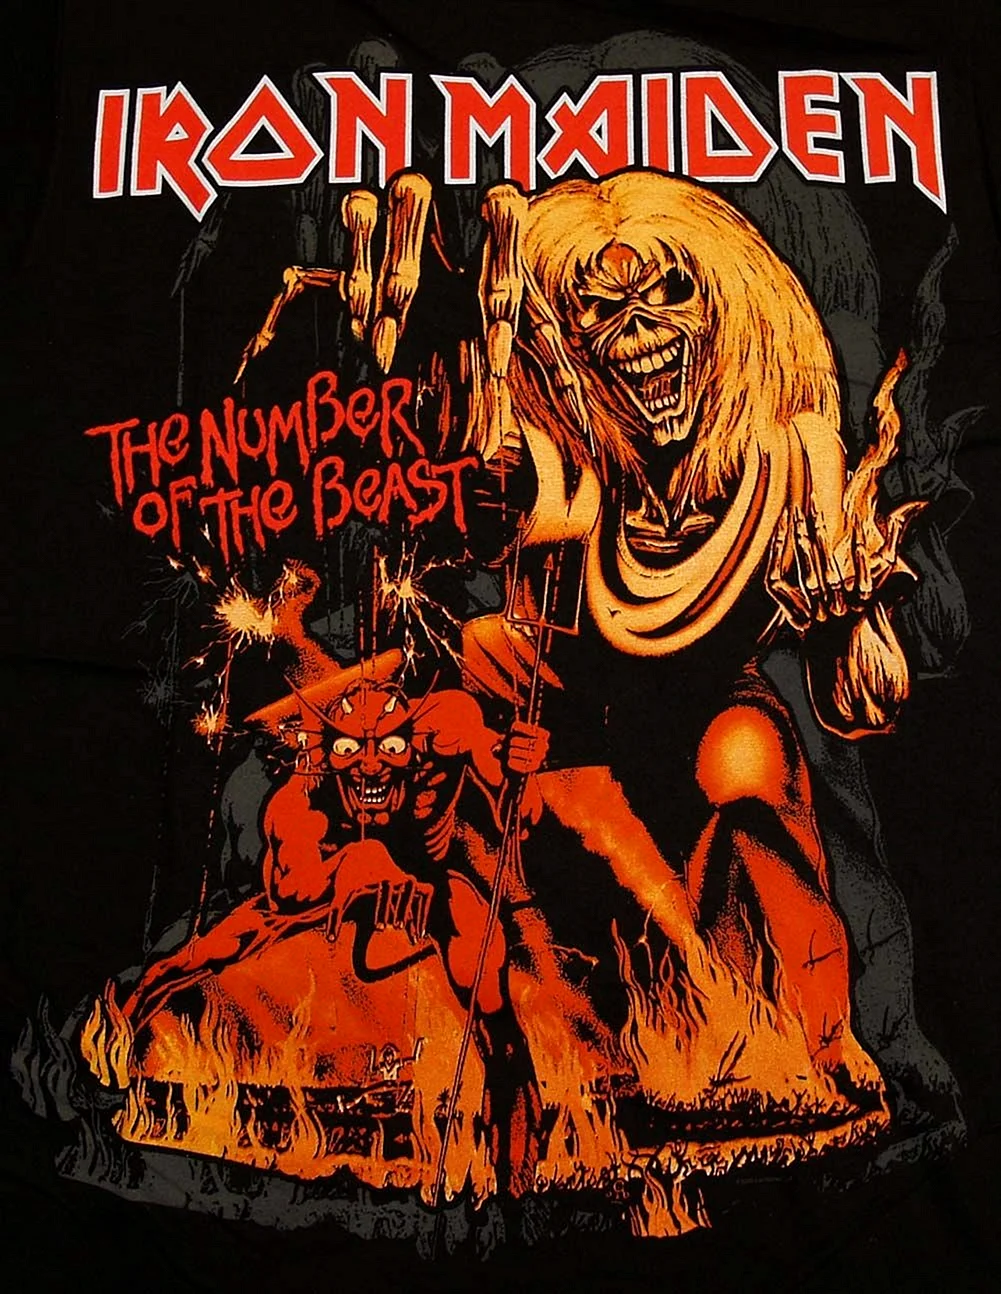 Iron Maiden Album Cover Wallpaper For iPhone